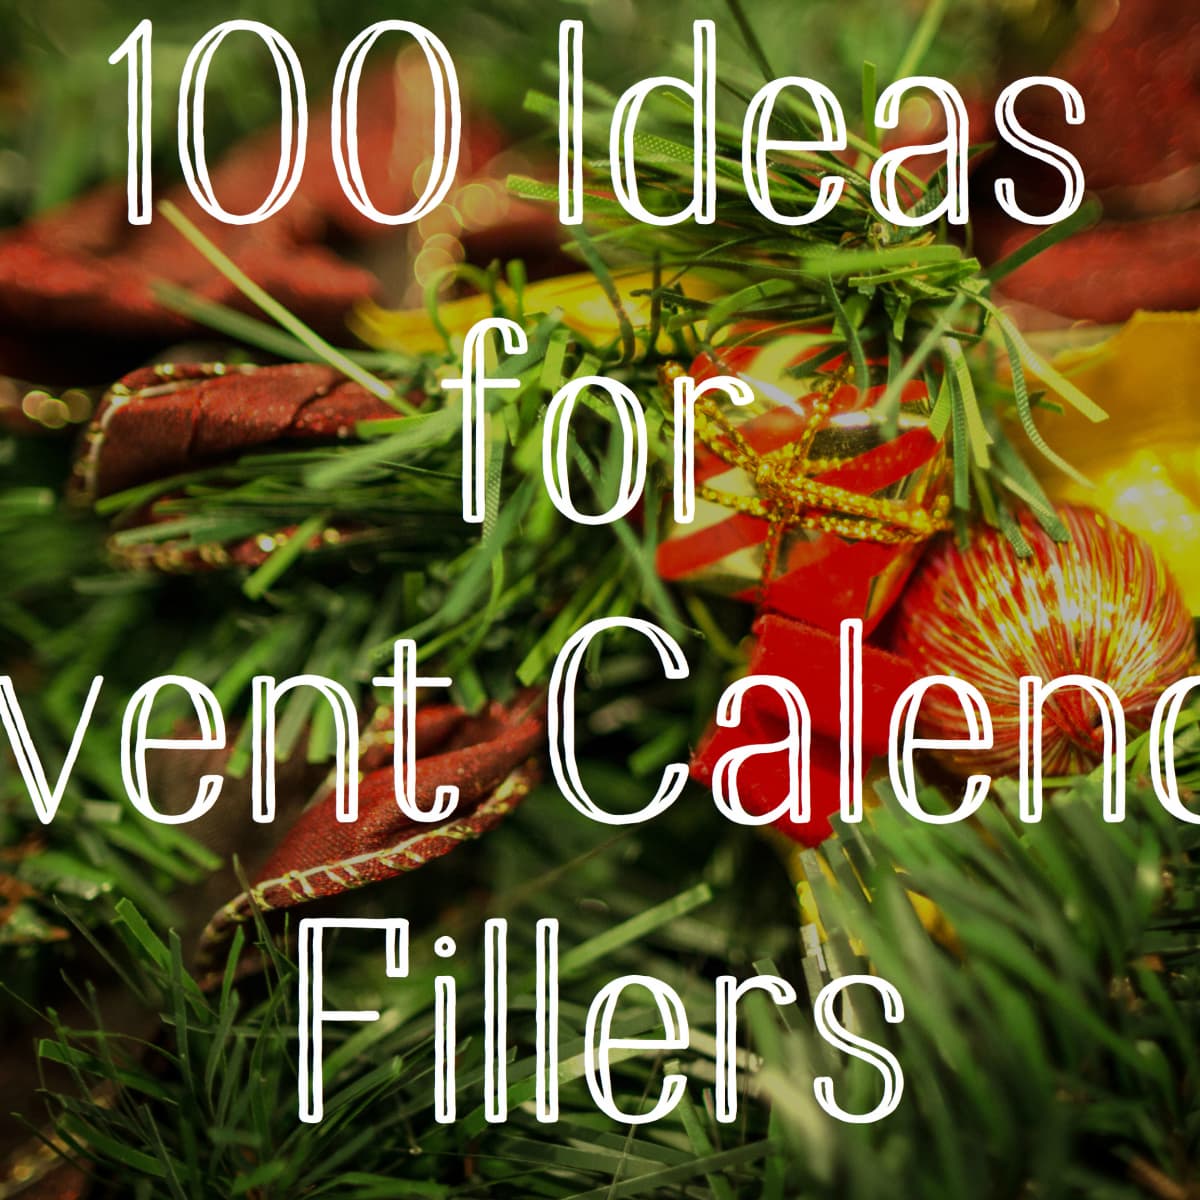 100 Advent Calendar Gift Ideas: Fillers for Men, Women and Kids  Advent calendar  gifts, Christmas advent calendar diy, Homemade advent calendars